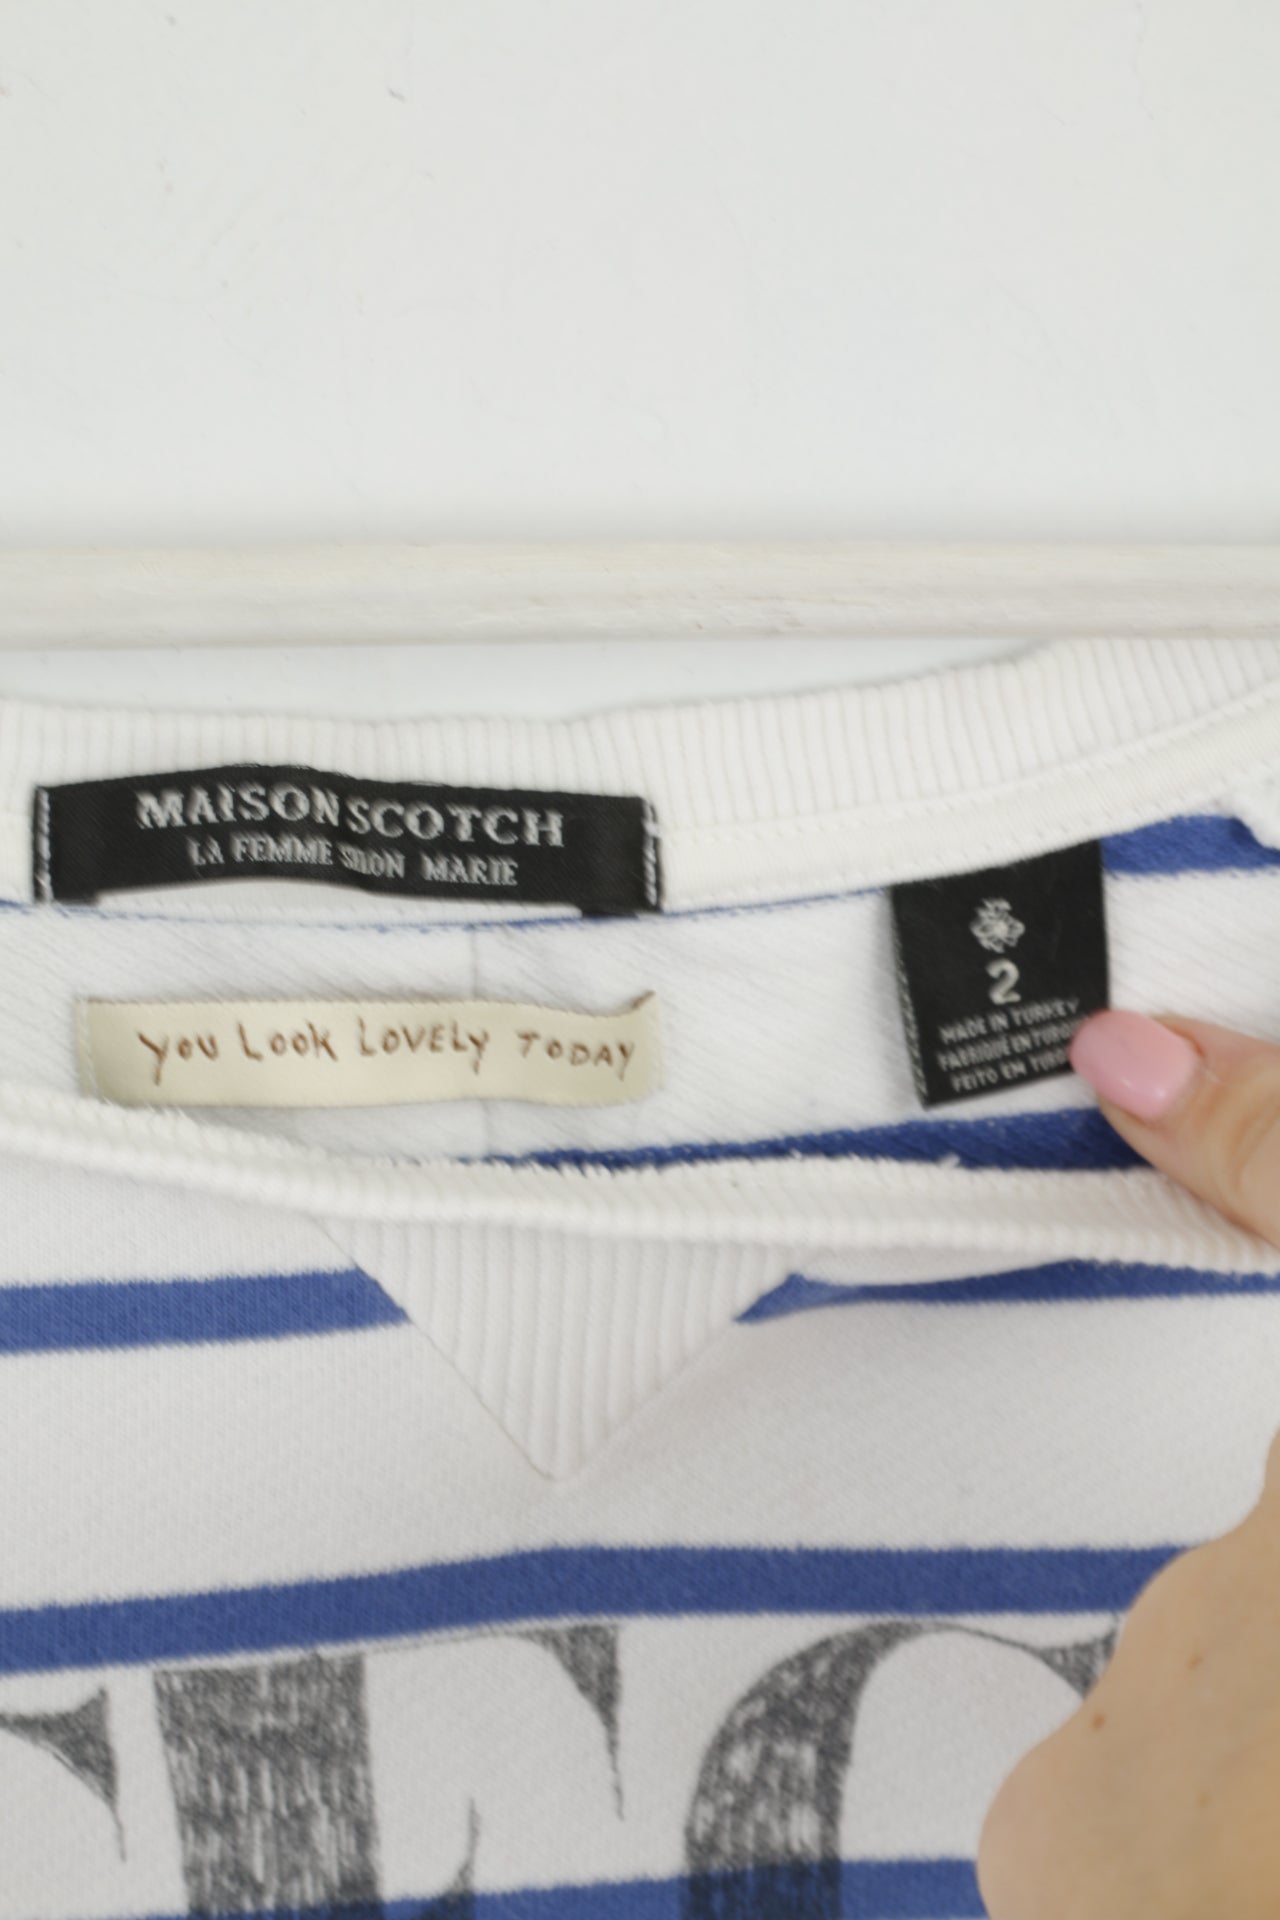 Maison Scotch Women 2 S Blouse White Blue Striped Cotton Short Sleeve Top